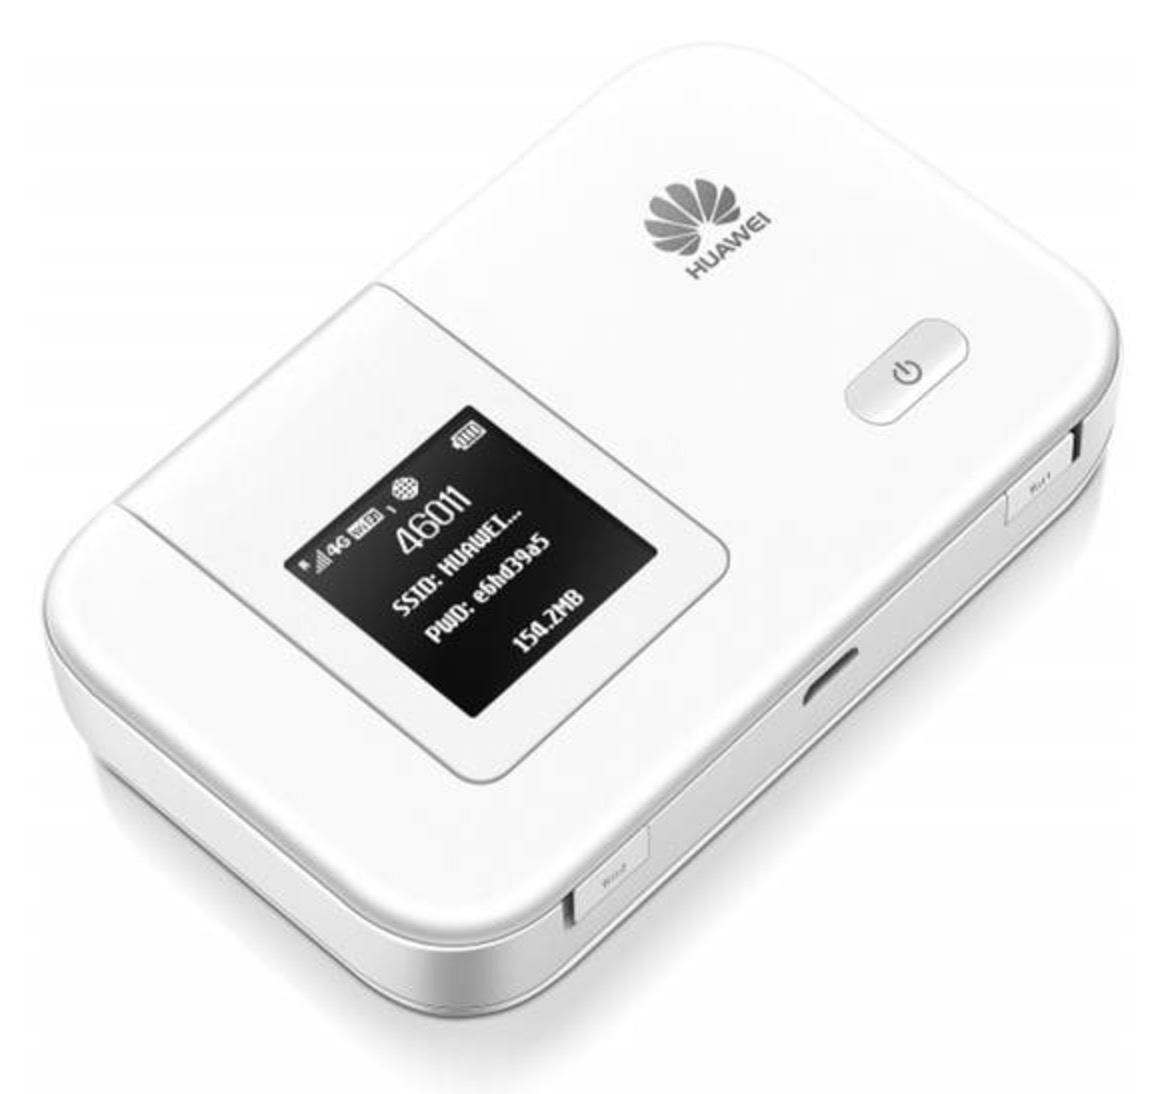 Huawei E5372 Mobiler Hotspot (150Mbps, HSPA+, WLAN) für nur 69,95 Euro